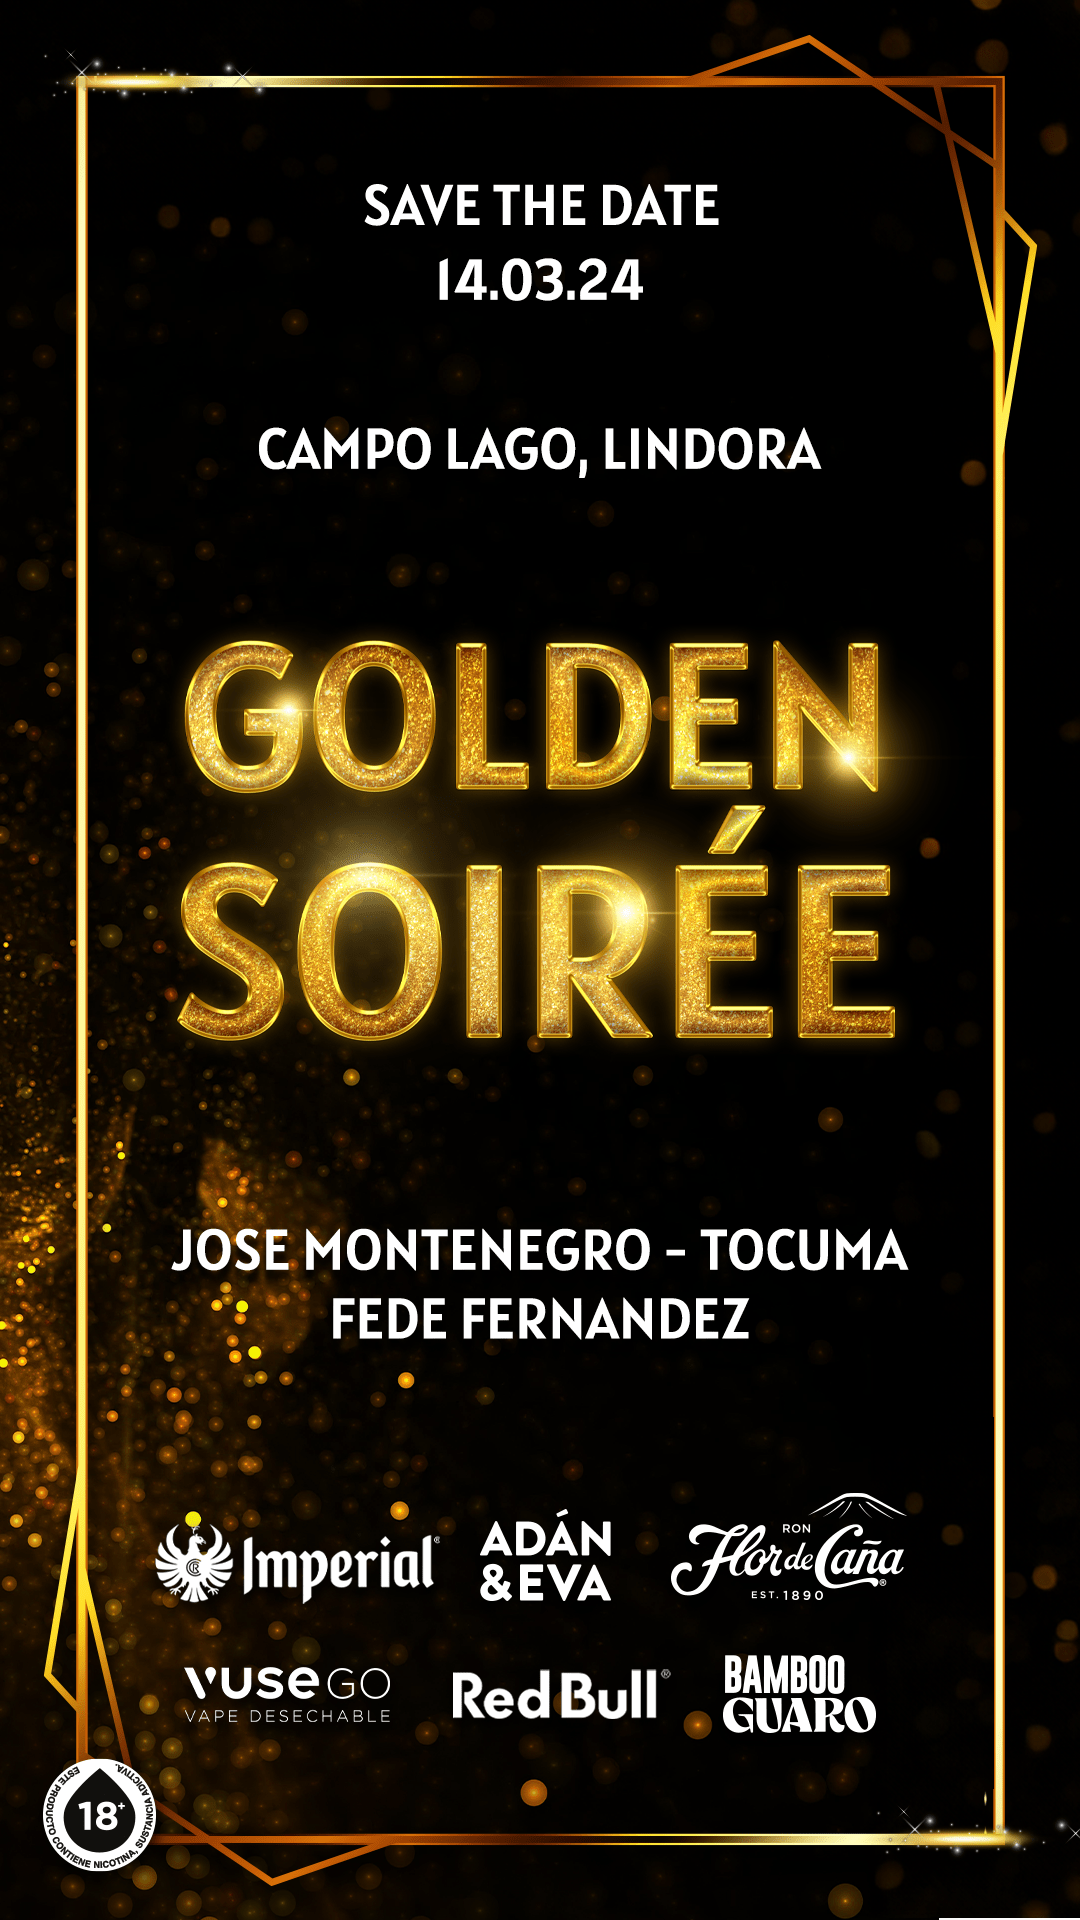 Golden Soirée by Mask